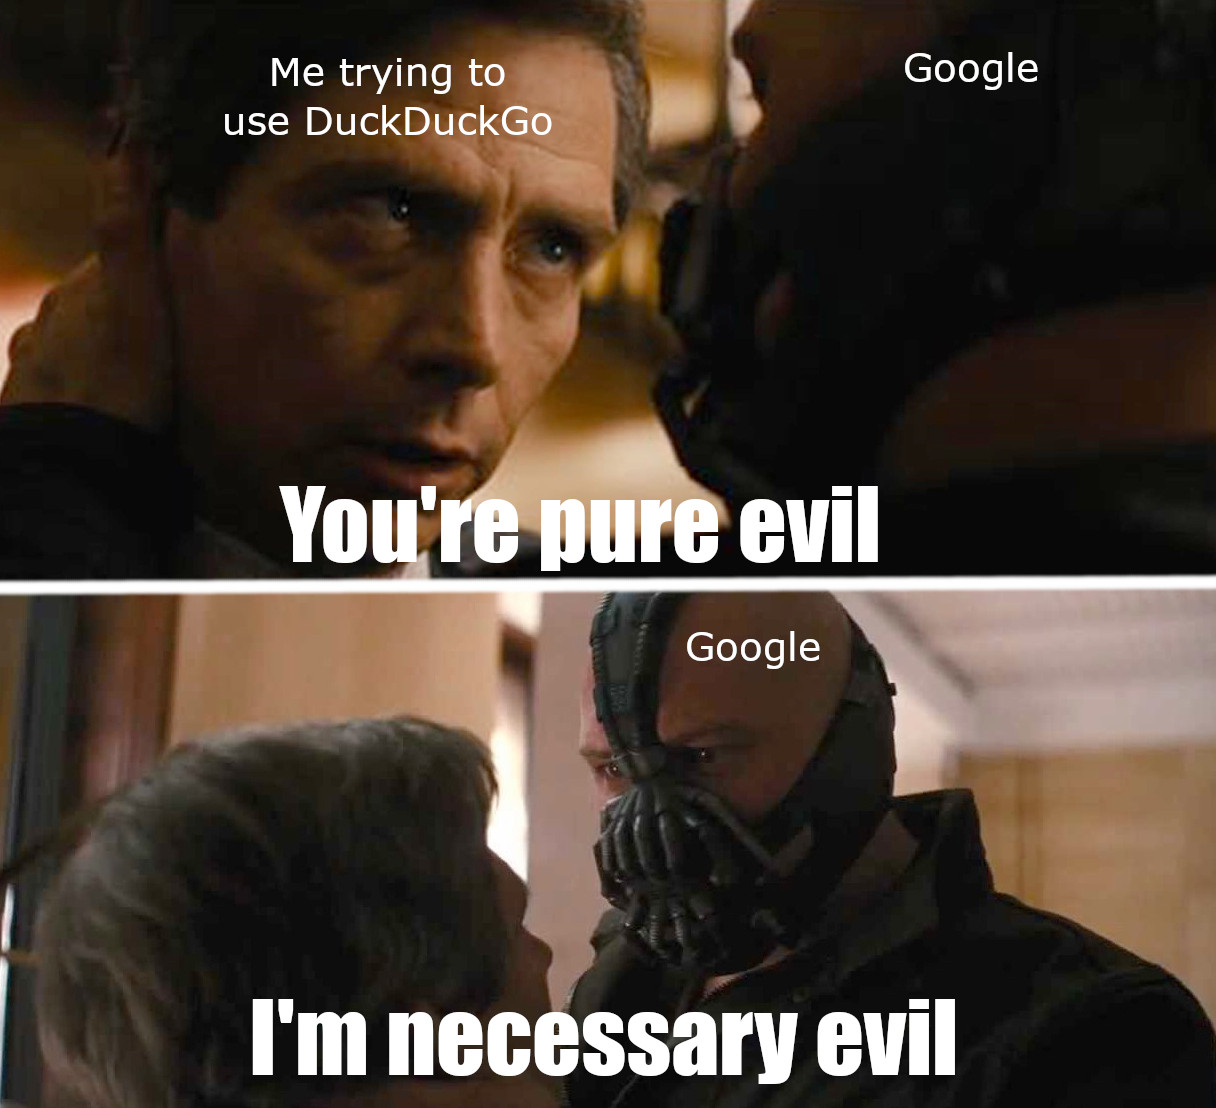 The Dark Knight Rises meme representing Google as a necessary evil.